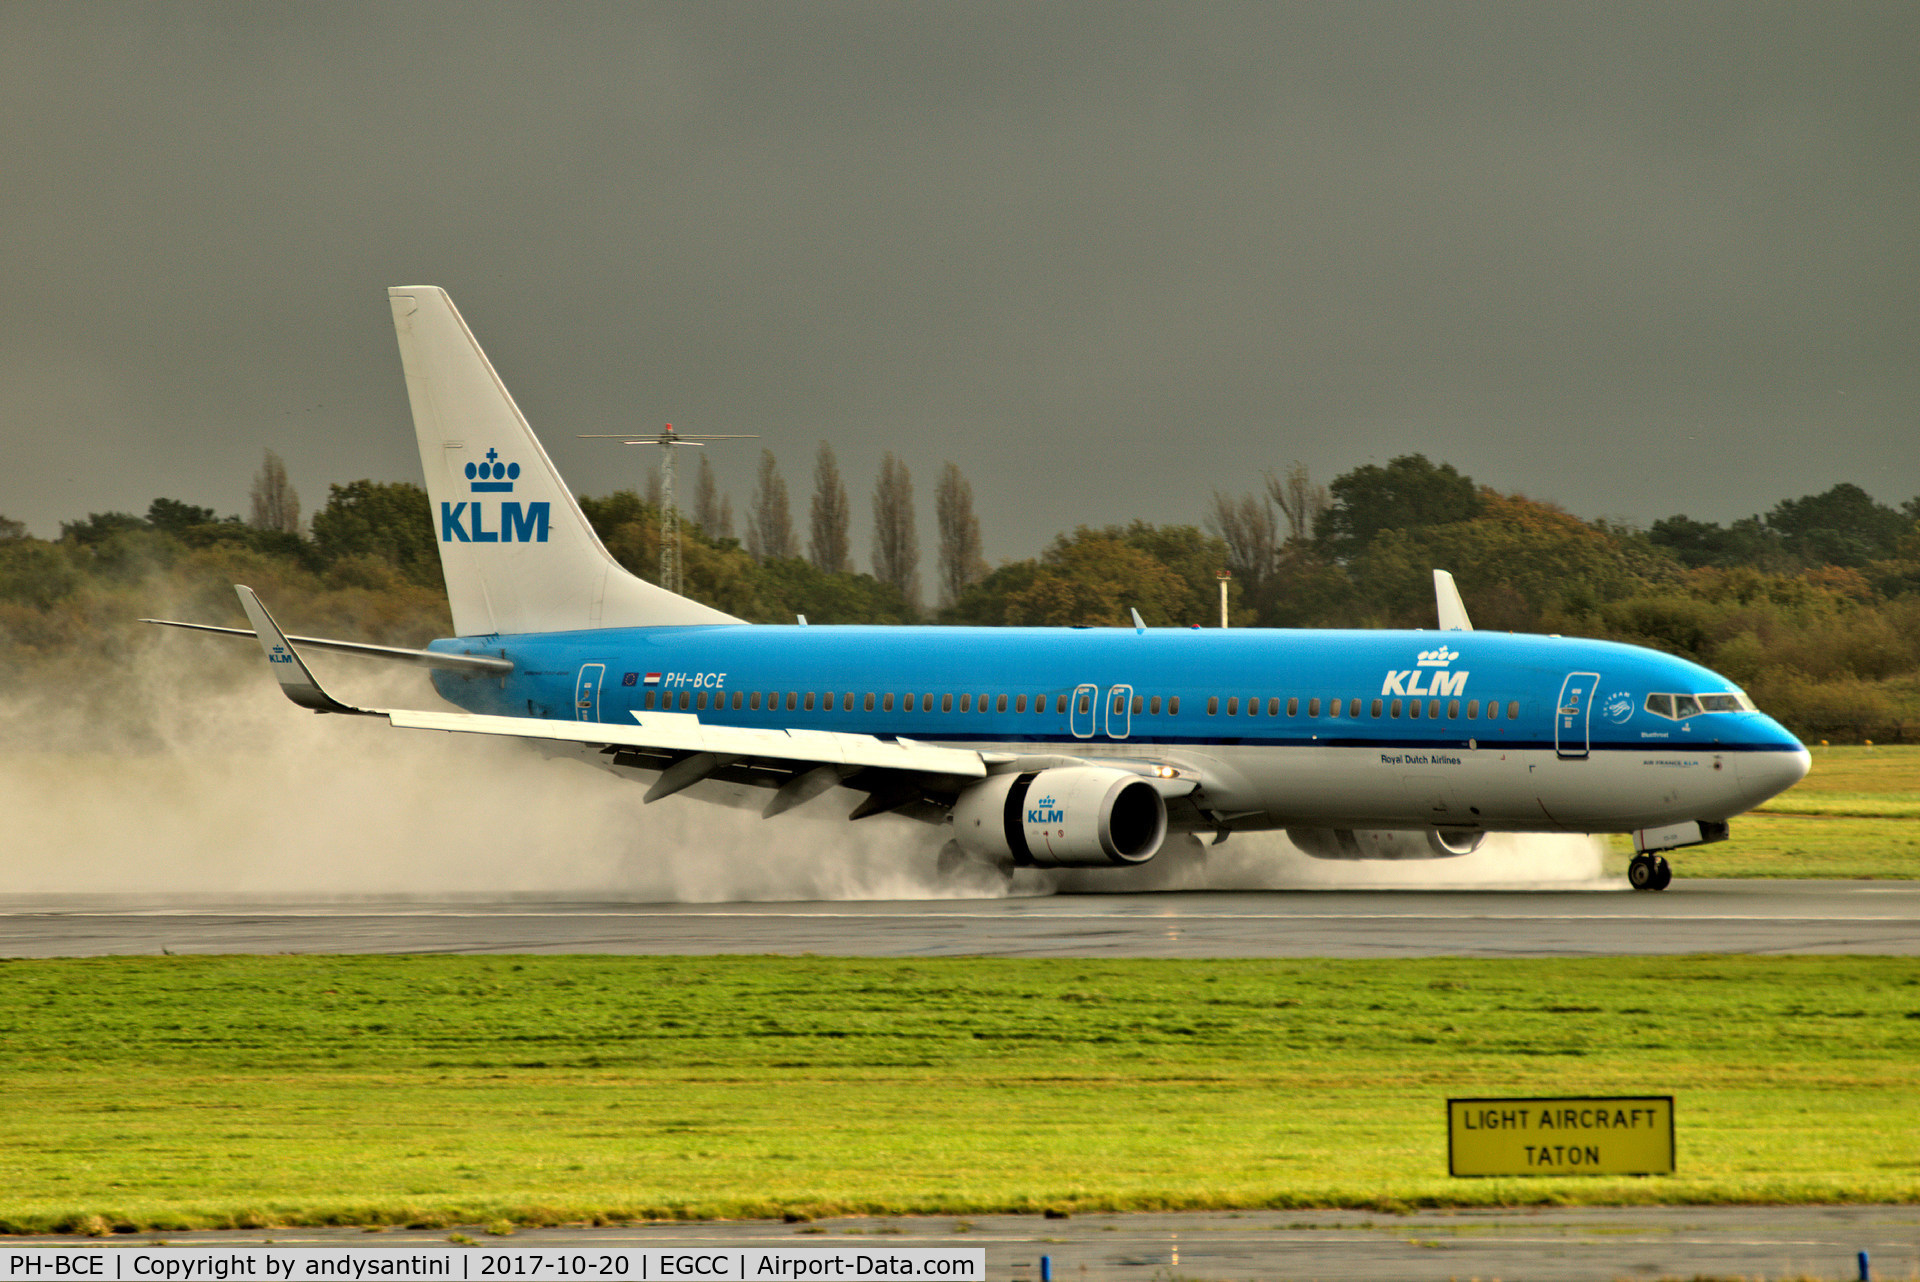 PH-BCE, 2014 Boeing 737-8K2 C/N 42151, landed on a wet runway.